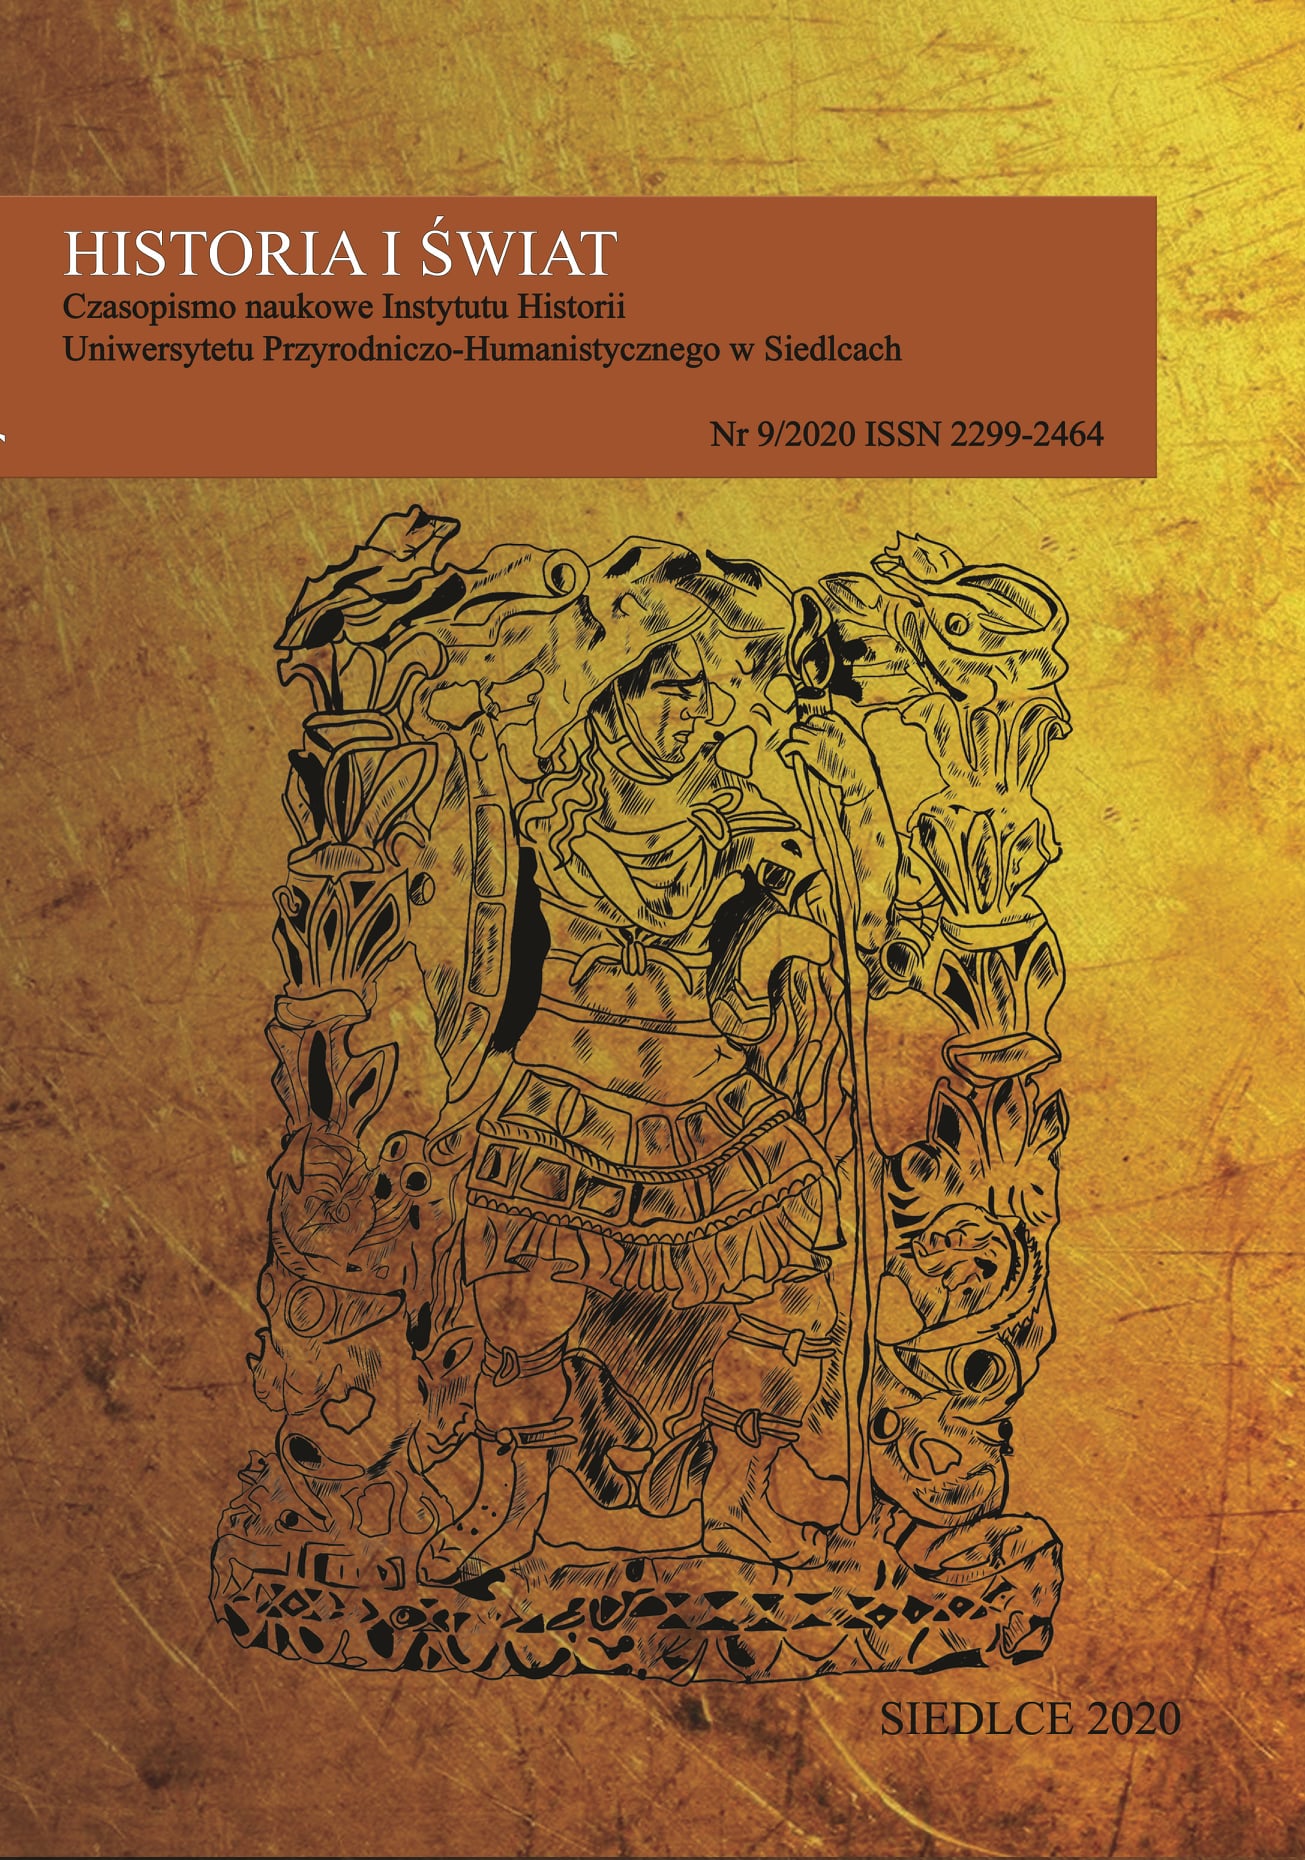 Ilkka Syvänne and Katarzyna Maksymiuk, The Military History of the Third Century Iran. Scientific Publishing House of Siedlce University, Siedlce 2018, ISBN: 978-83-7051-894-3